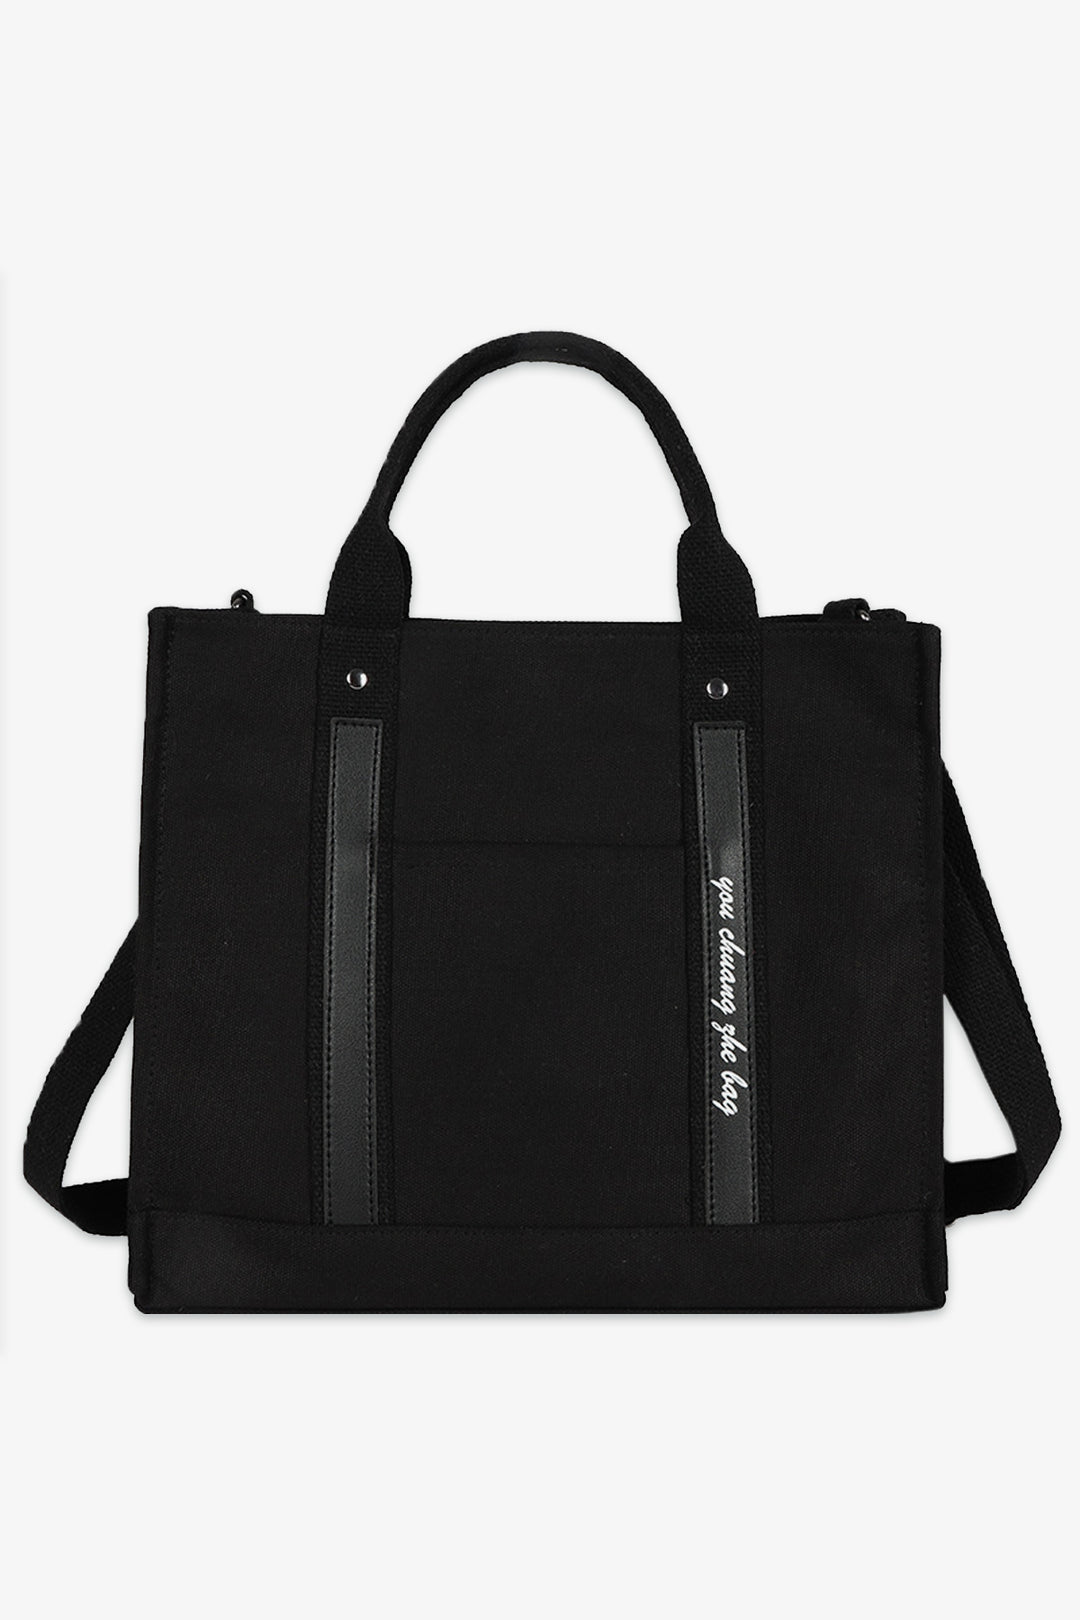 Black Student Class Trendy Shoulder Bag - S22 - WHB0039